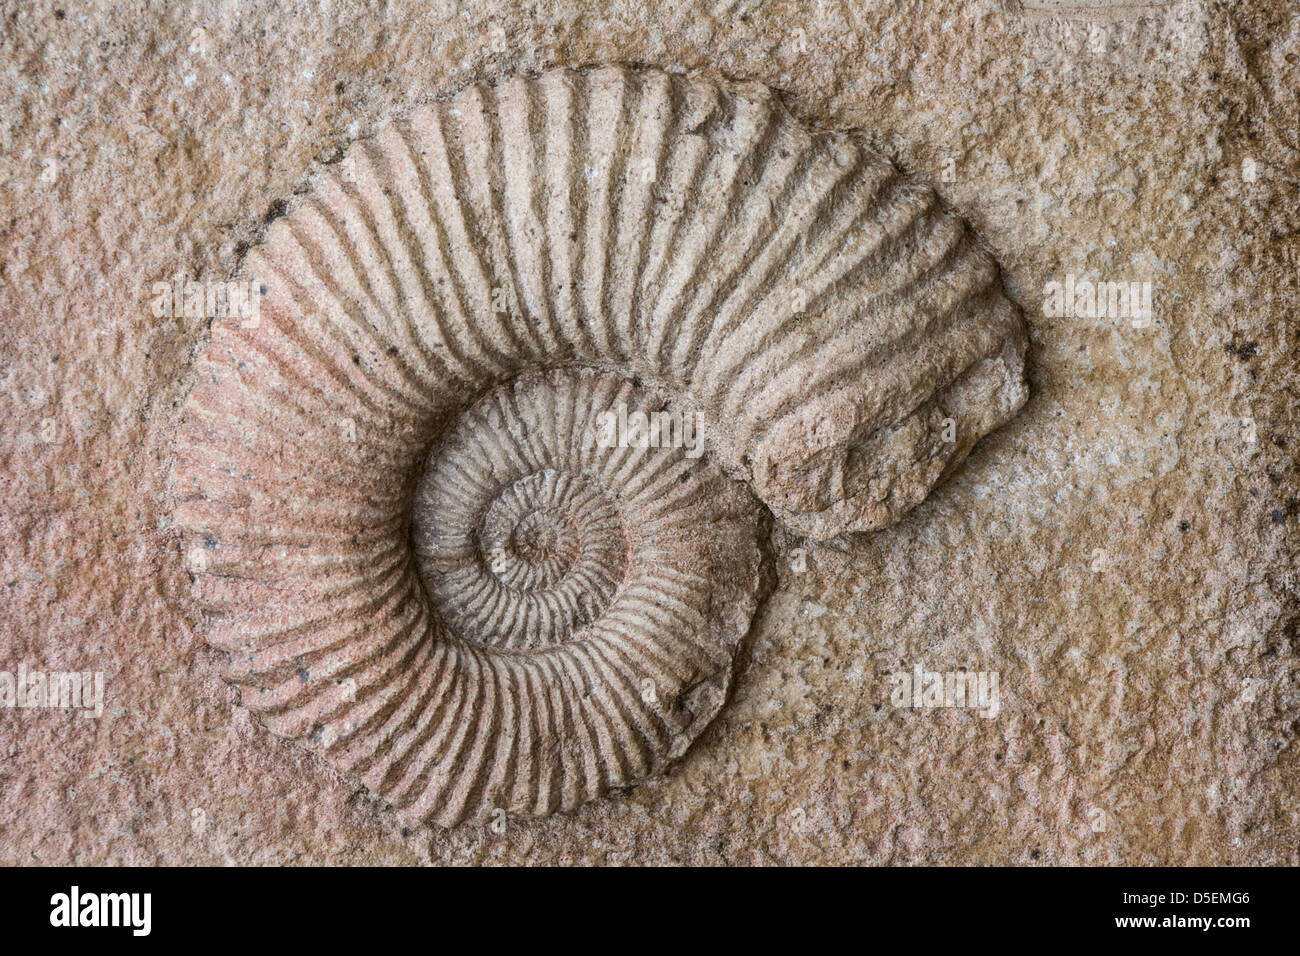 - Fósiles de ammonites - caracoles prehistóricas Foto de stock